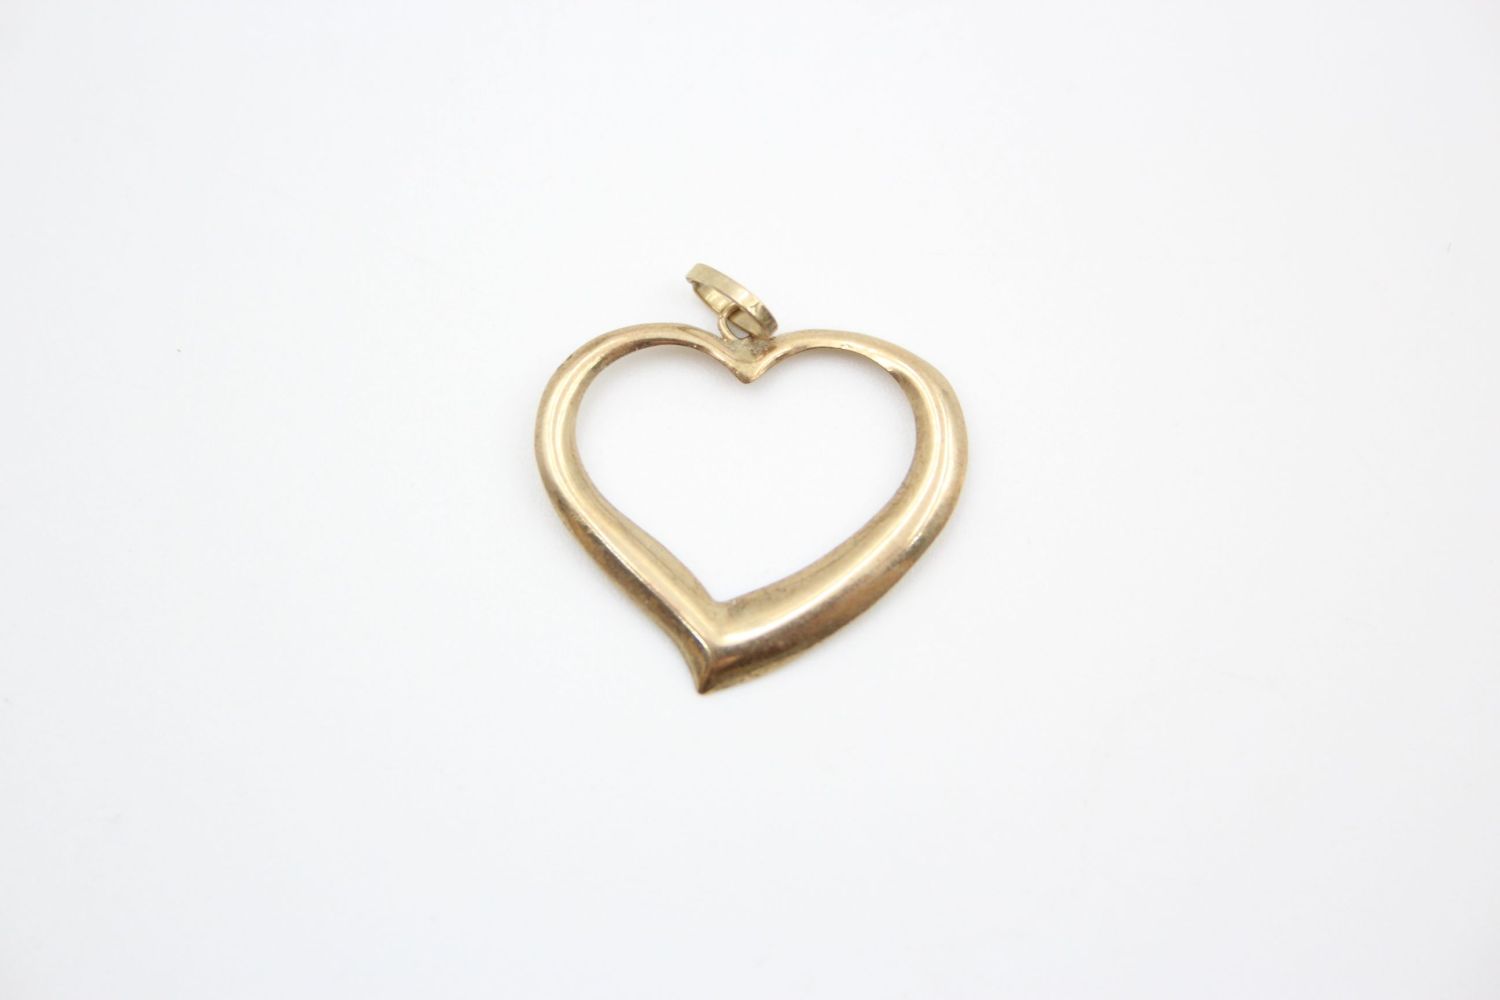 4 x 9ct gold heart pendants 2.4 grams gross - Image 3 of 11